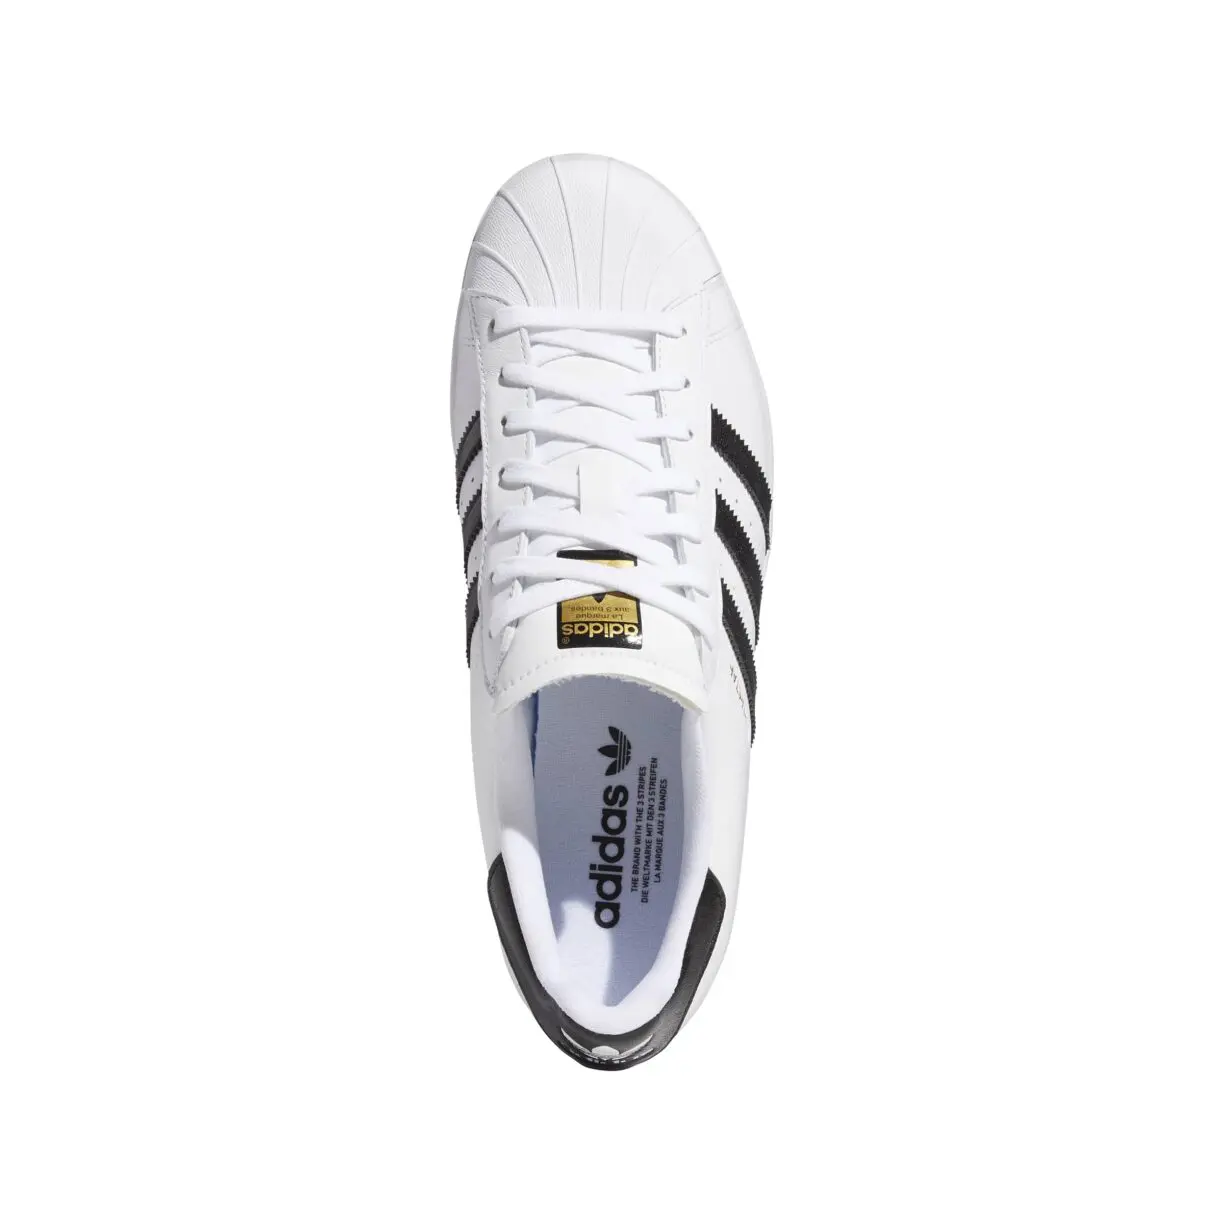 Adidas superstar limited edition10